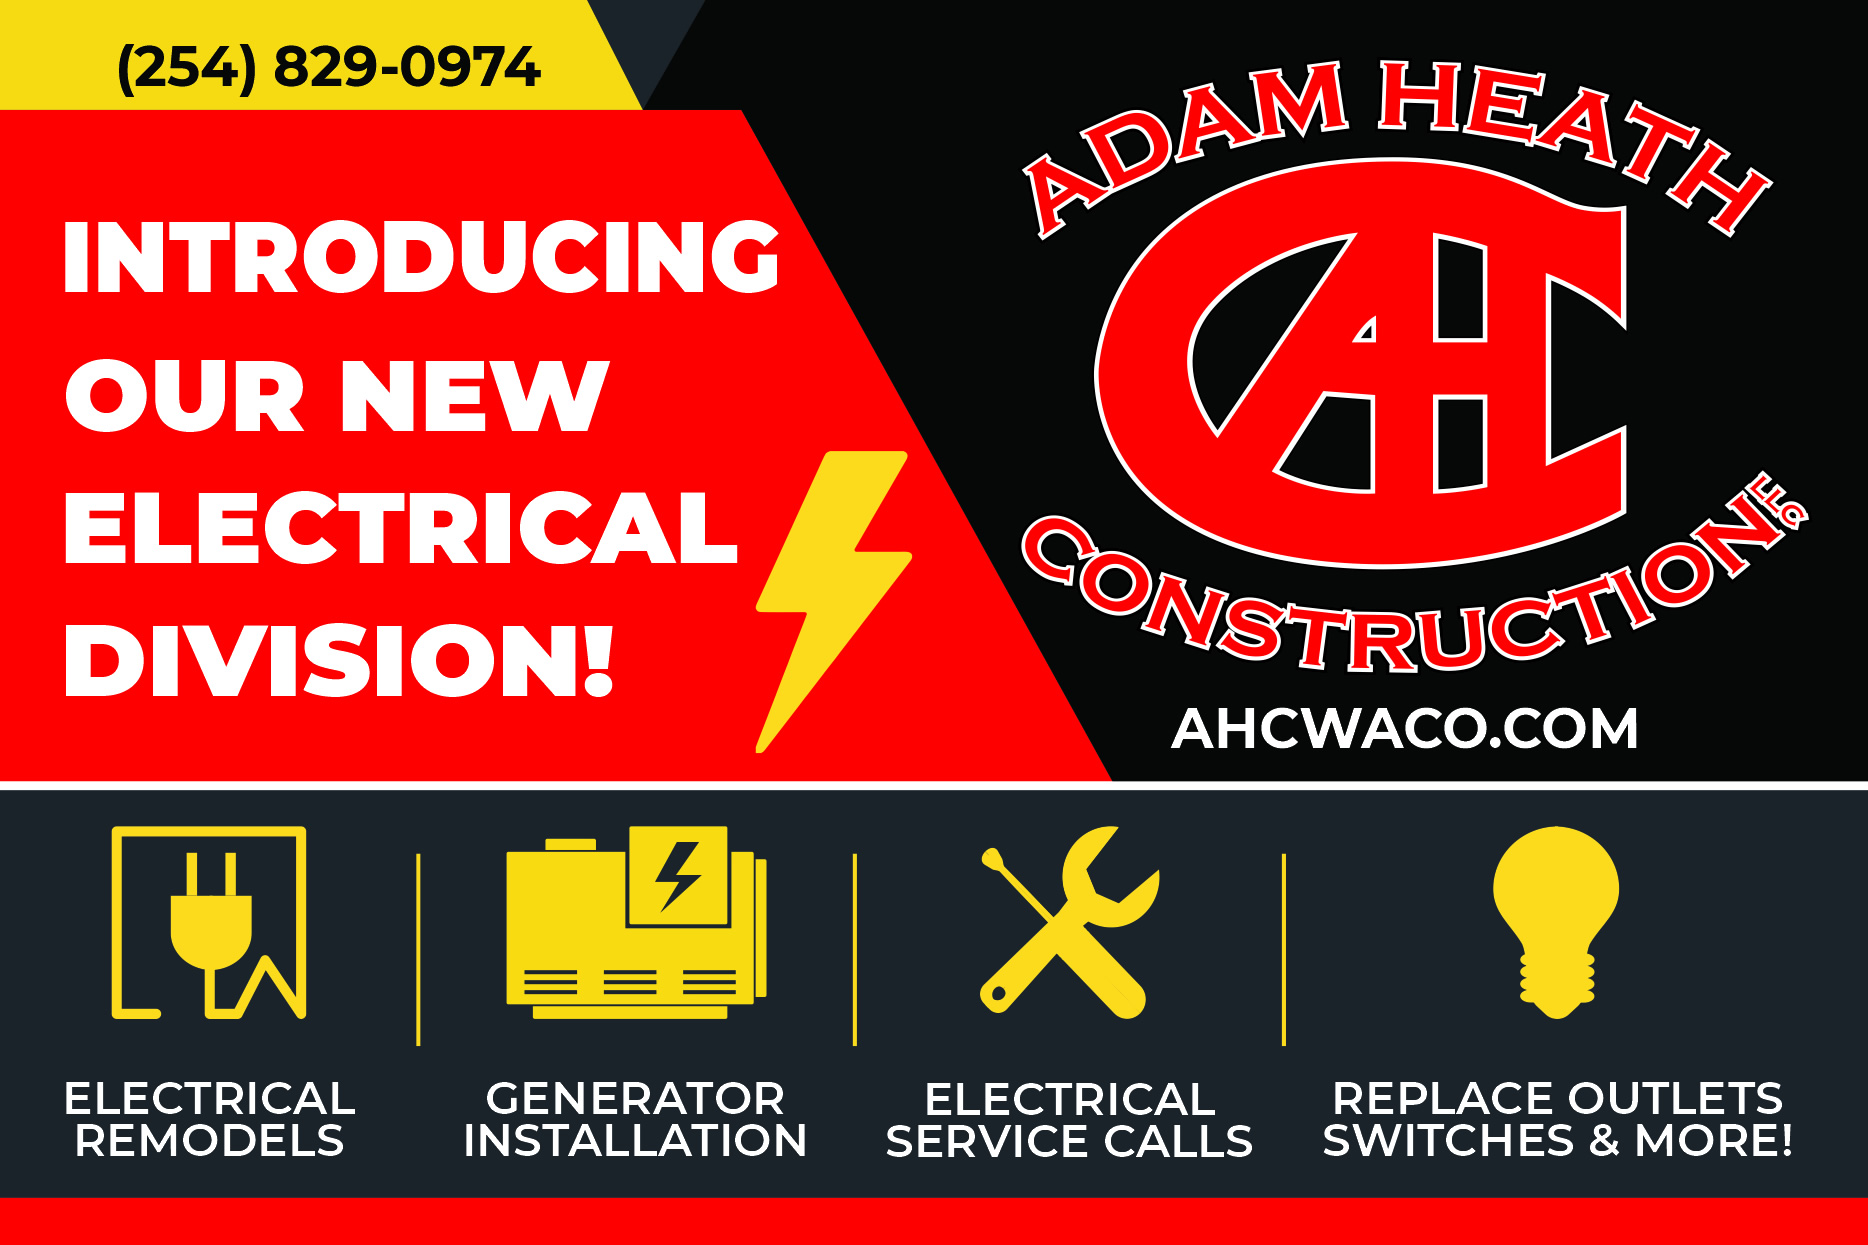 Adam Heath Construction Waco Electrical Division